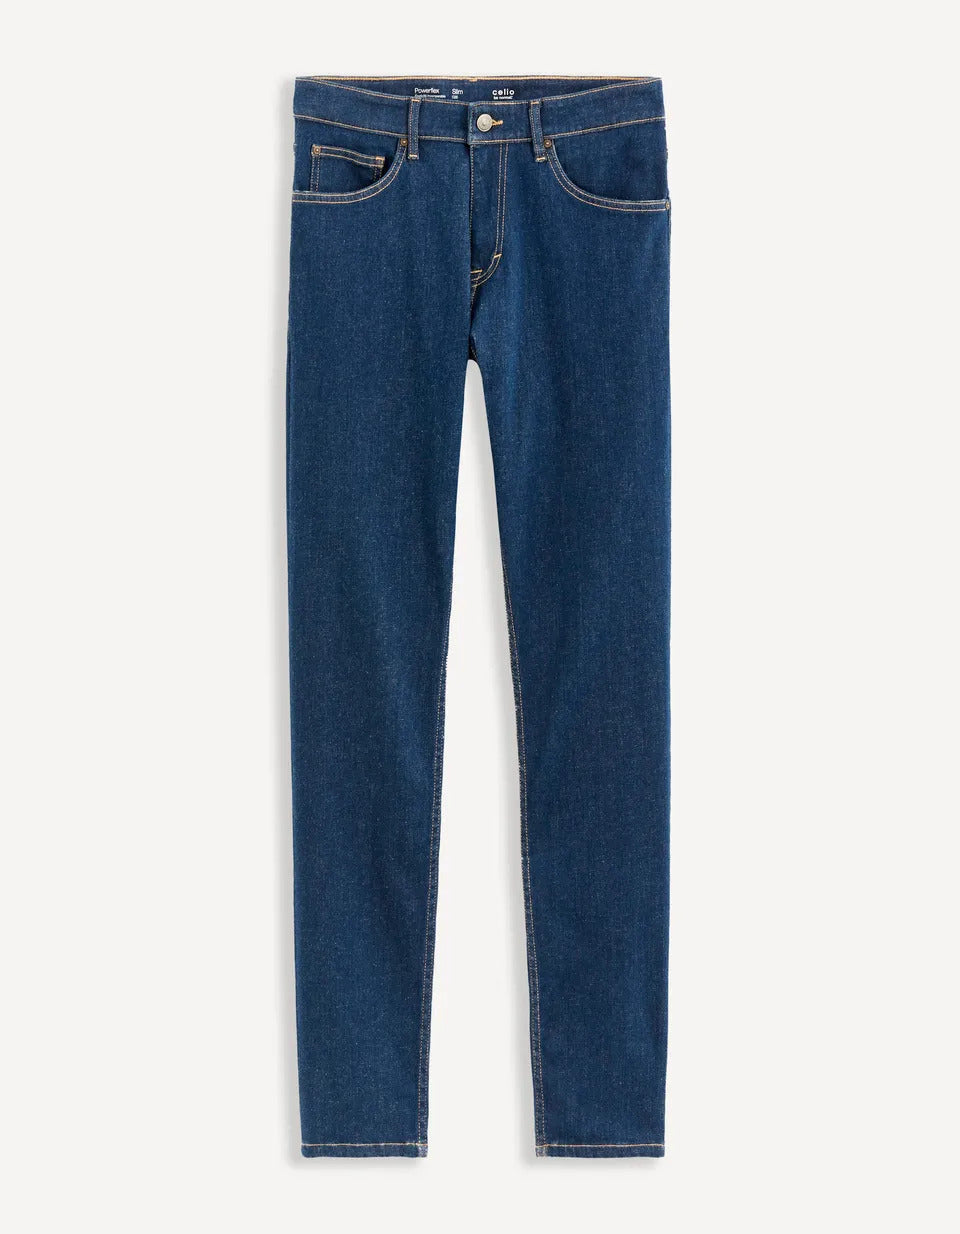 Blue Standard Fit Jeans